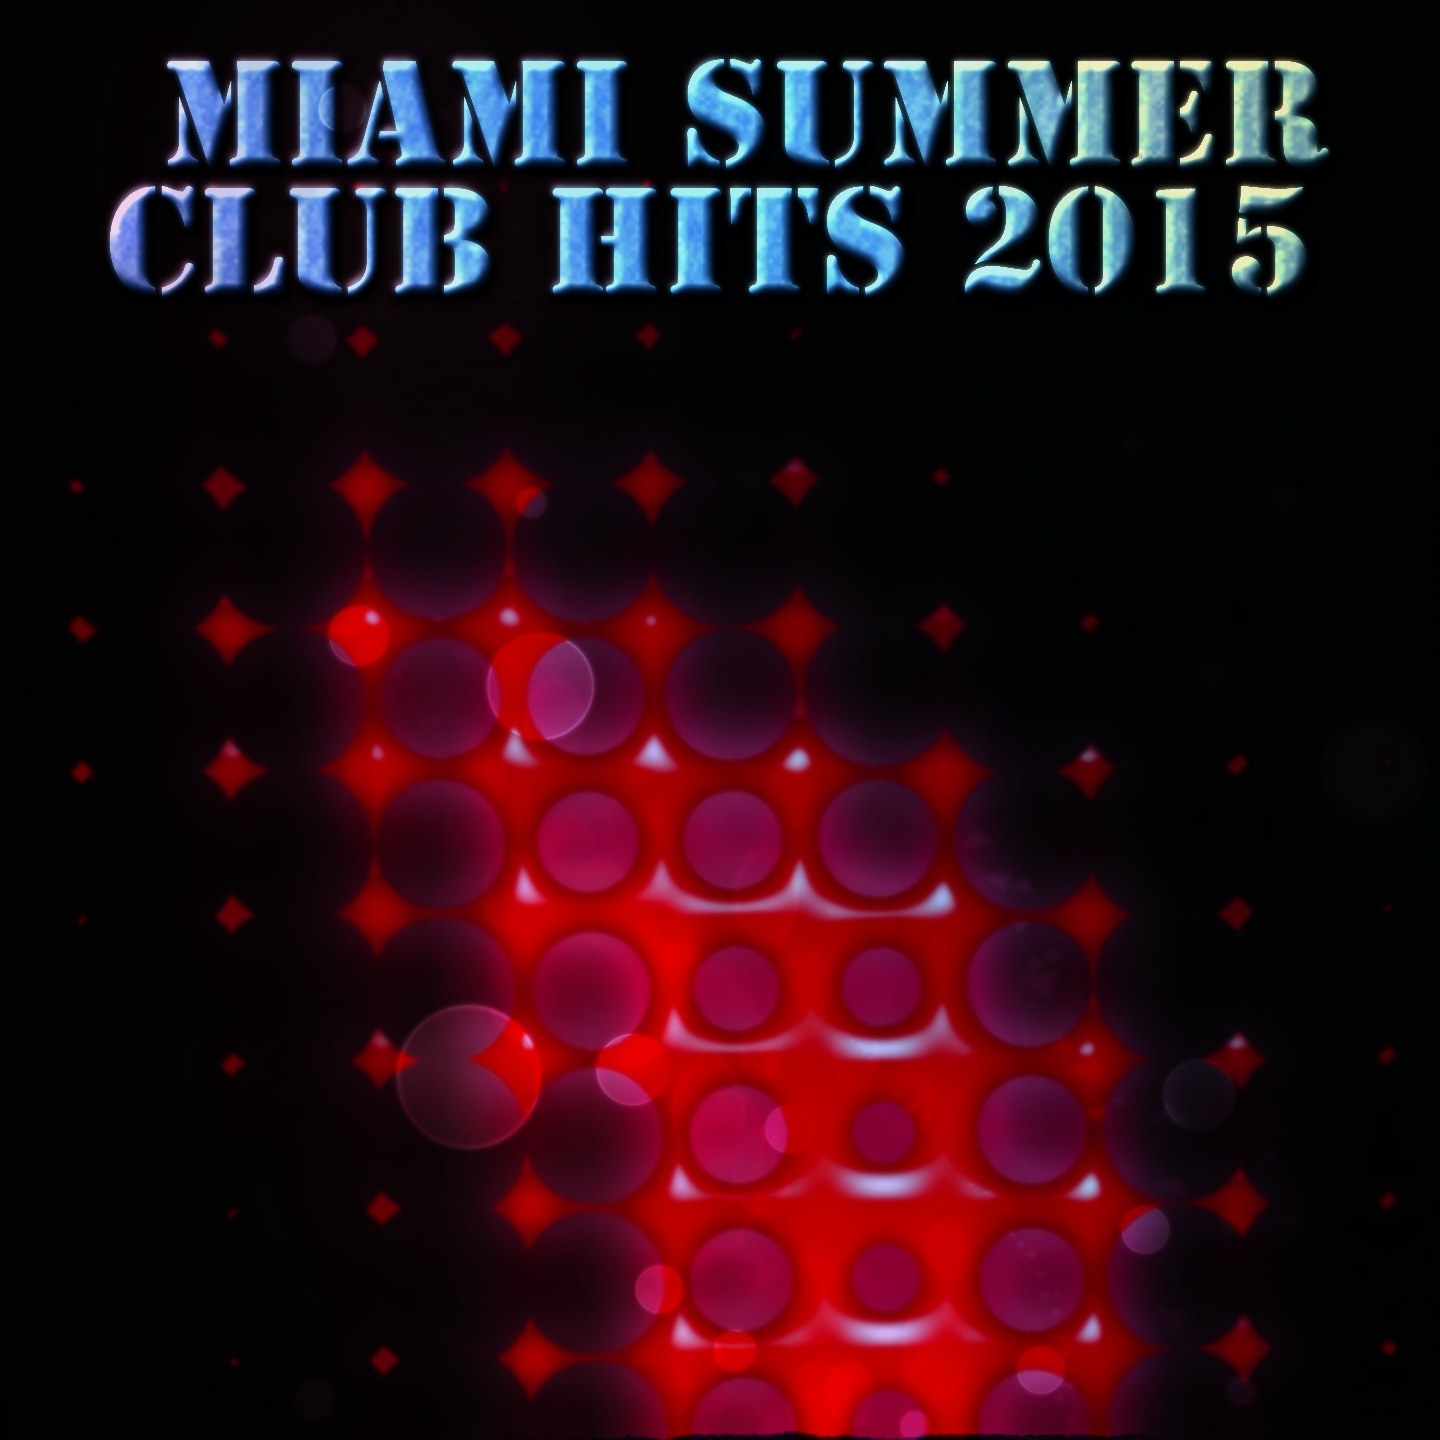 Miami Summer Club Hits 2015 (Top 30 Dance Songs)